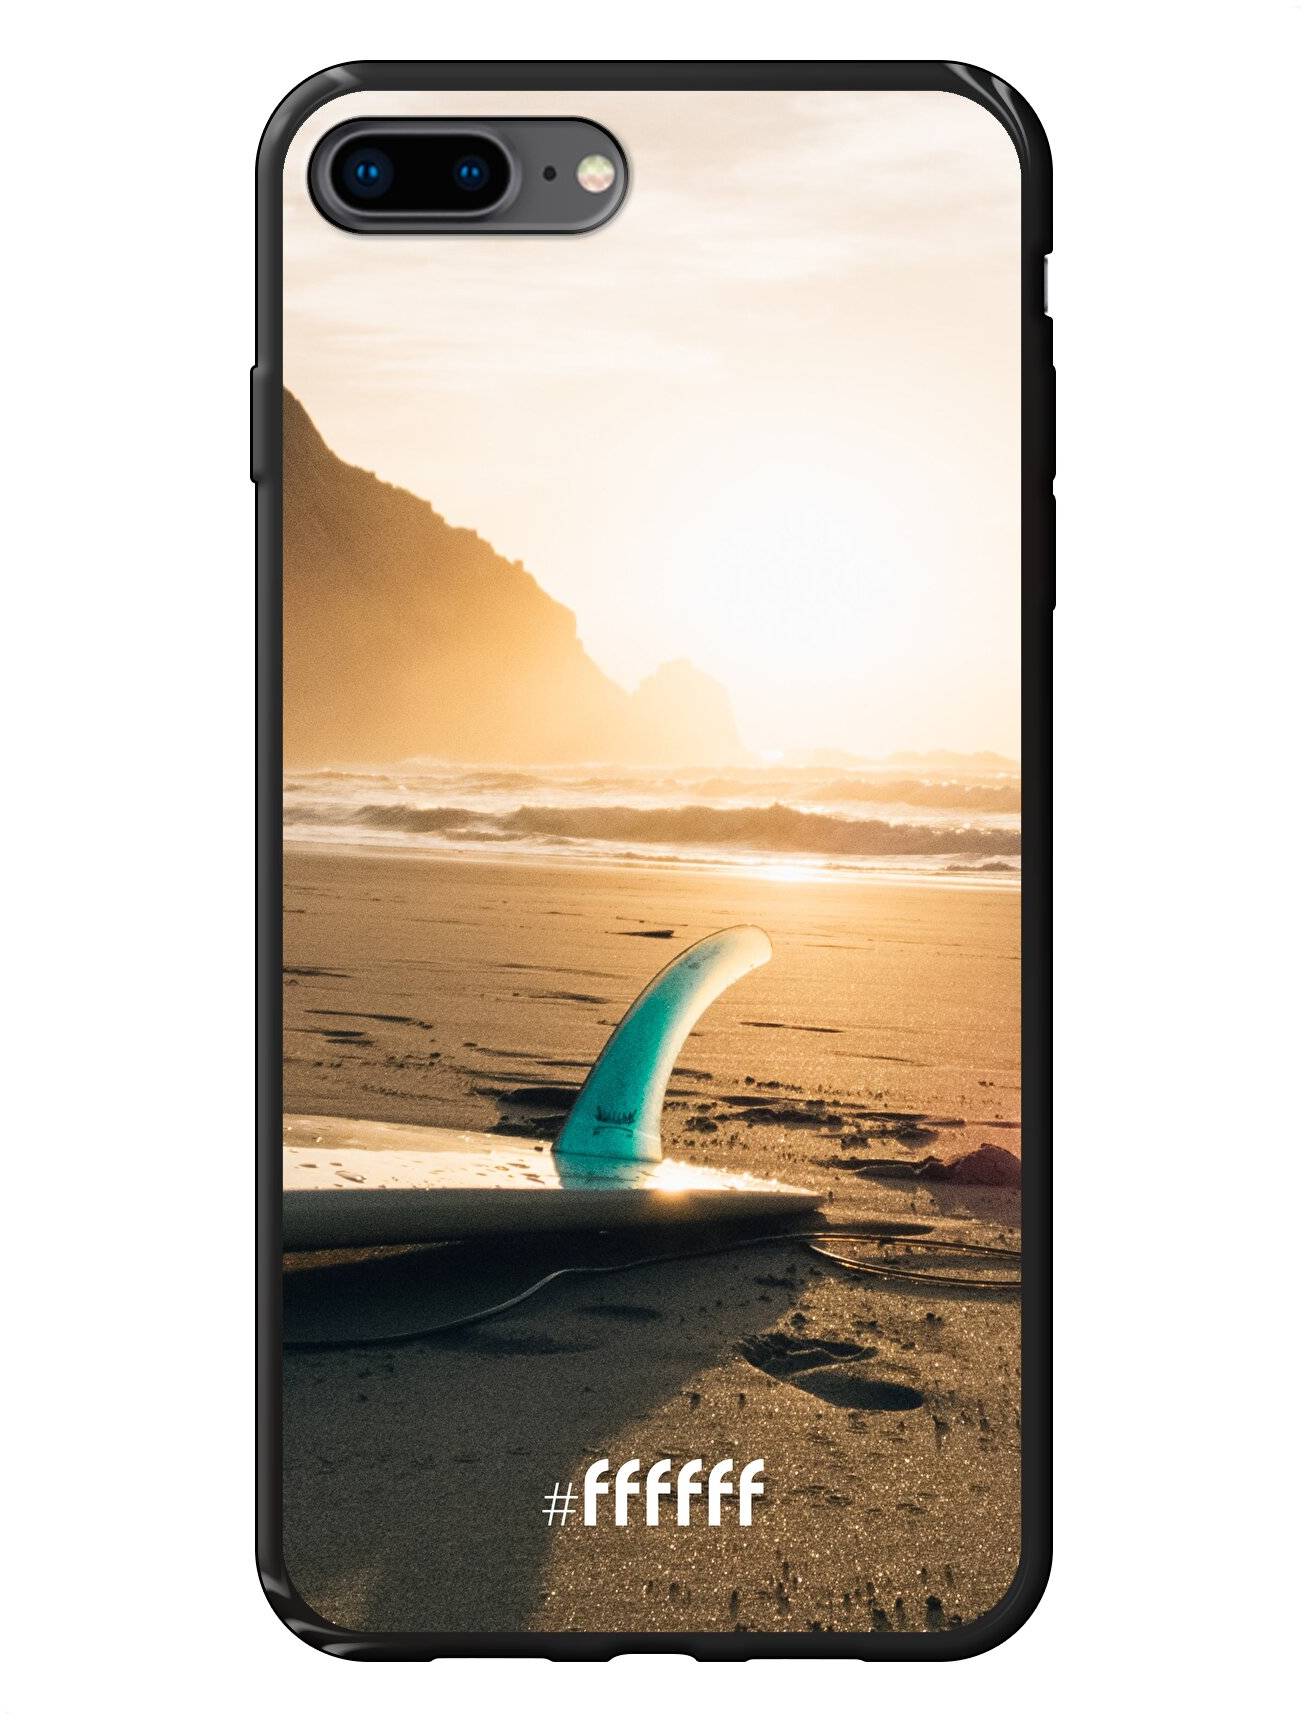 Sunset Surf iPhone 8 Plus